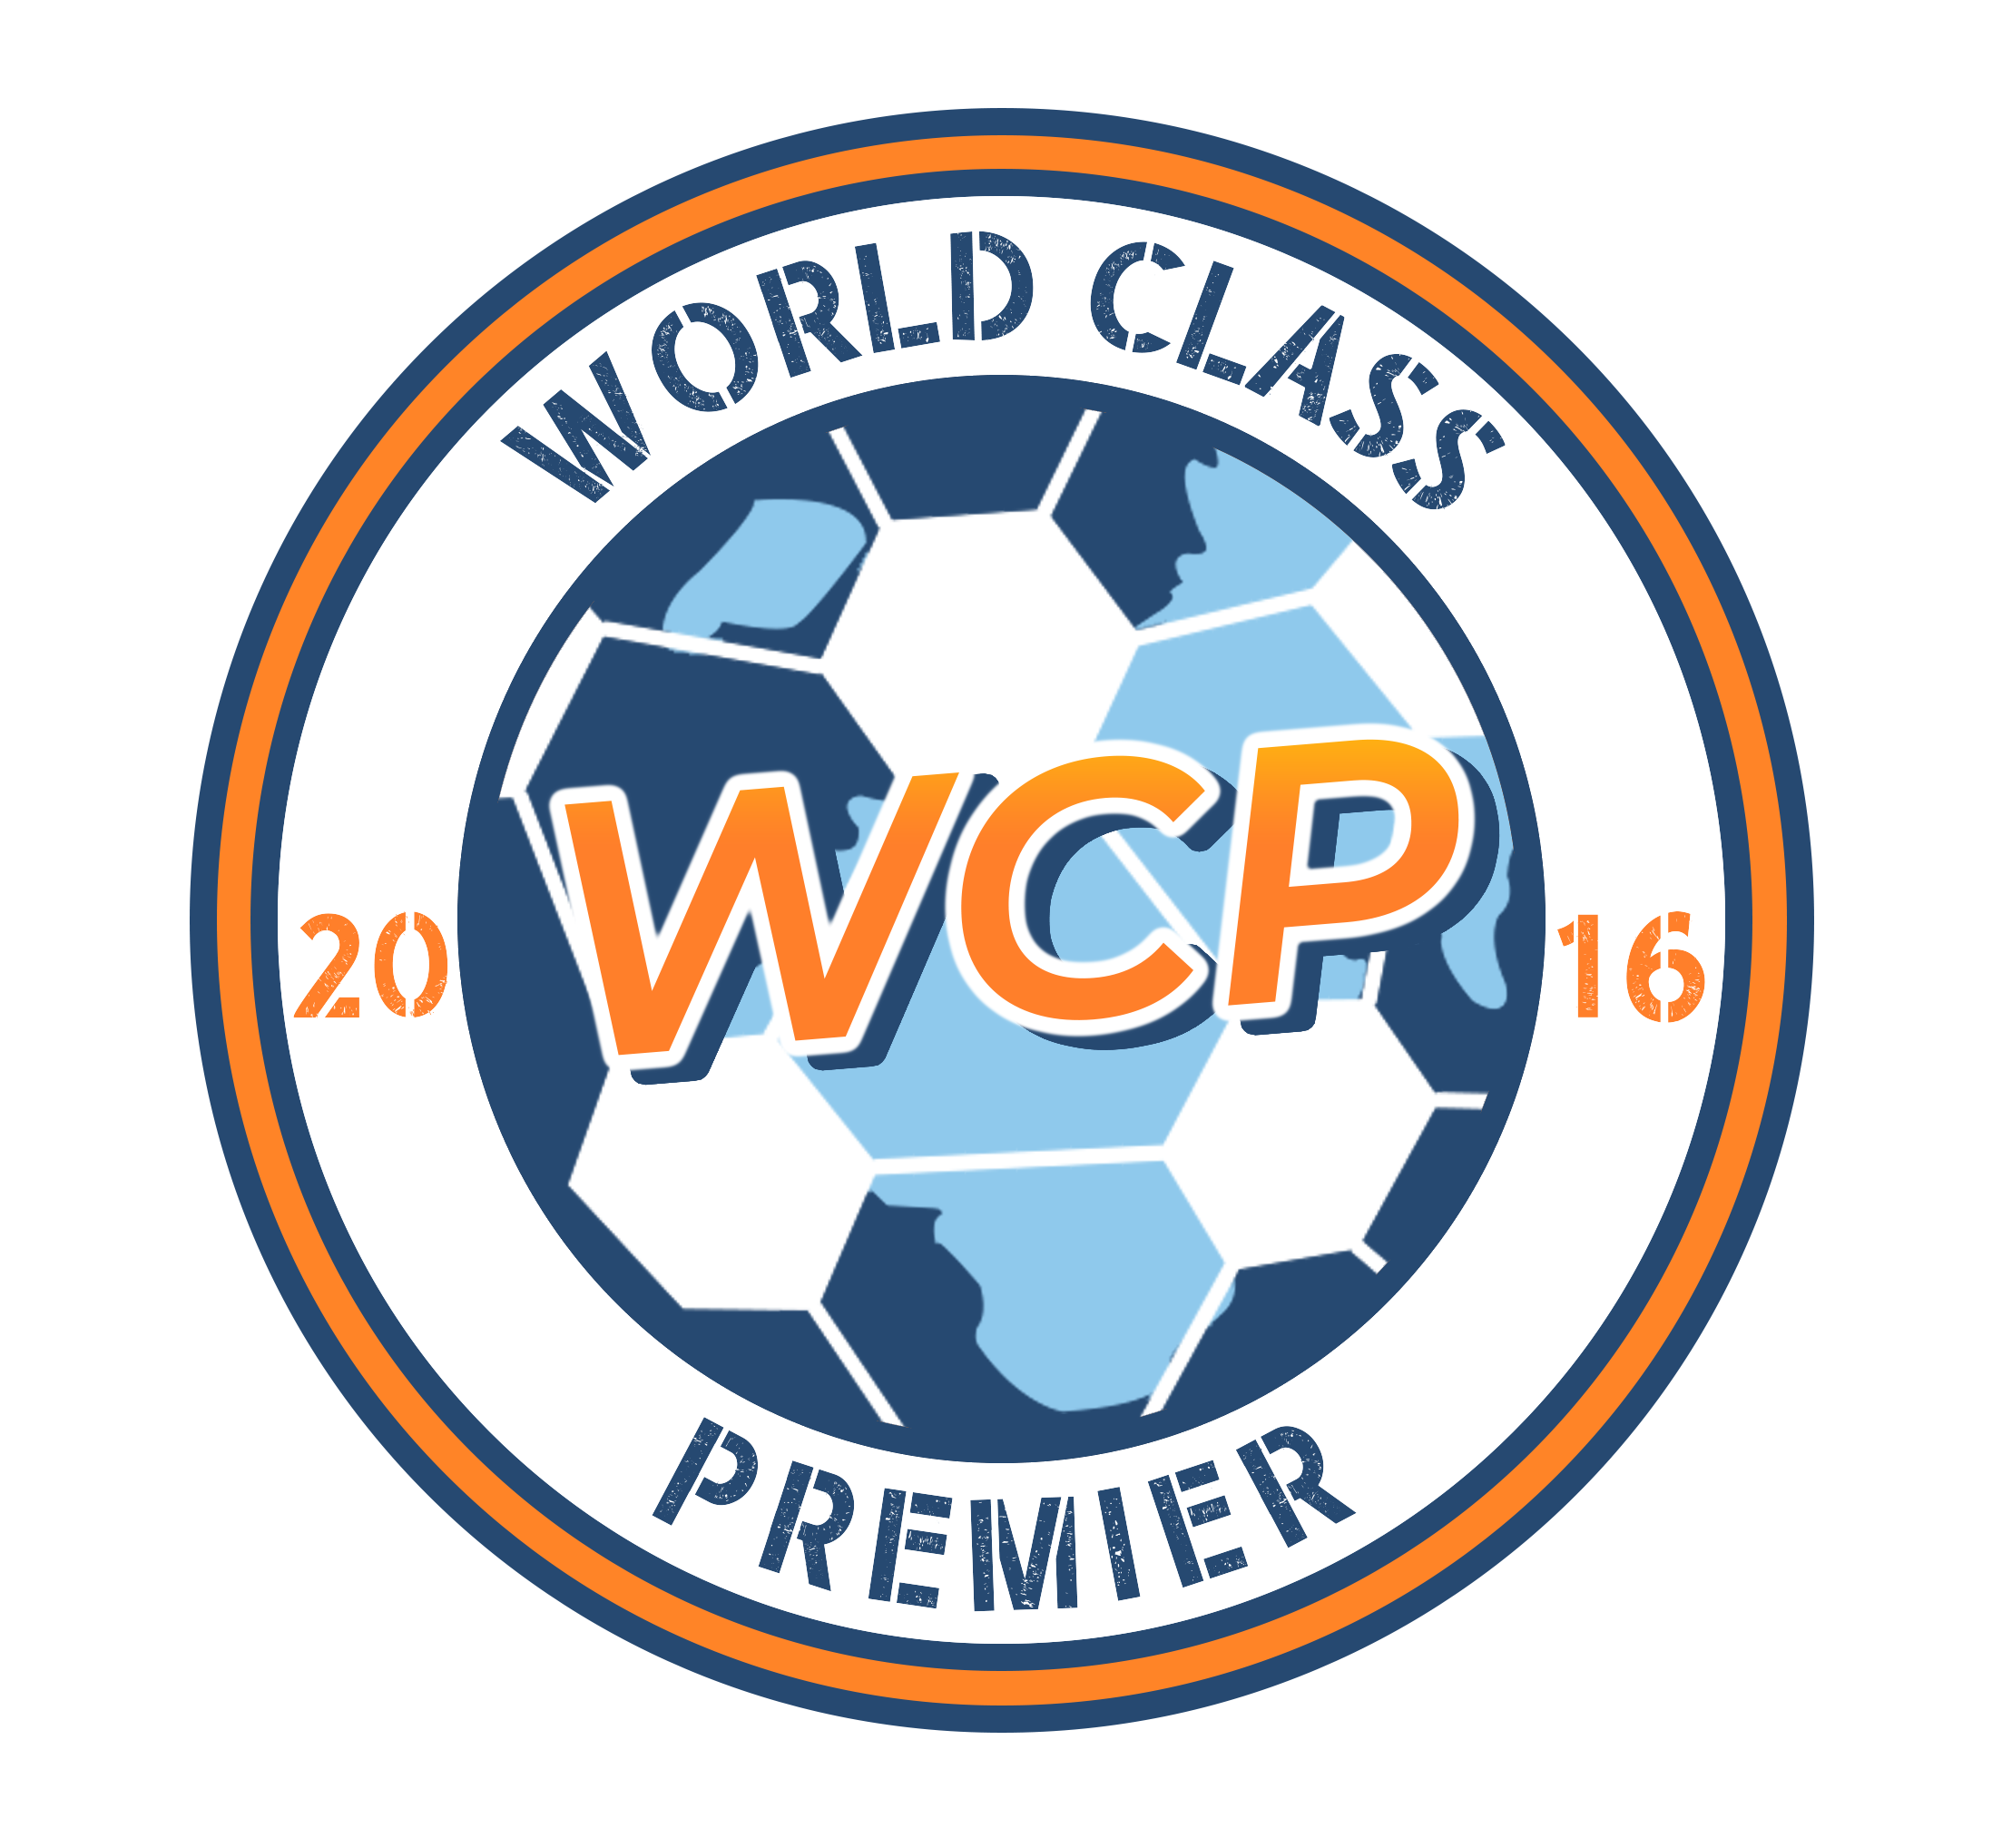 World Class Premier team badge